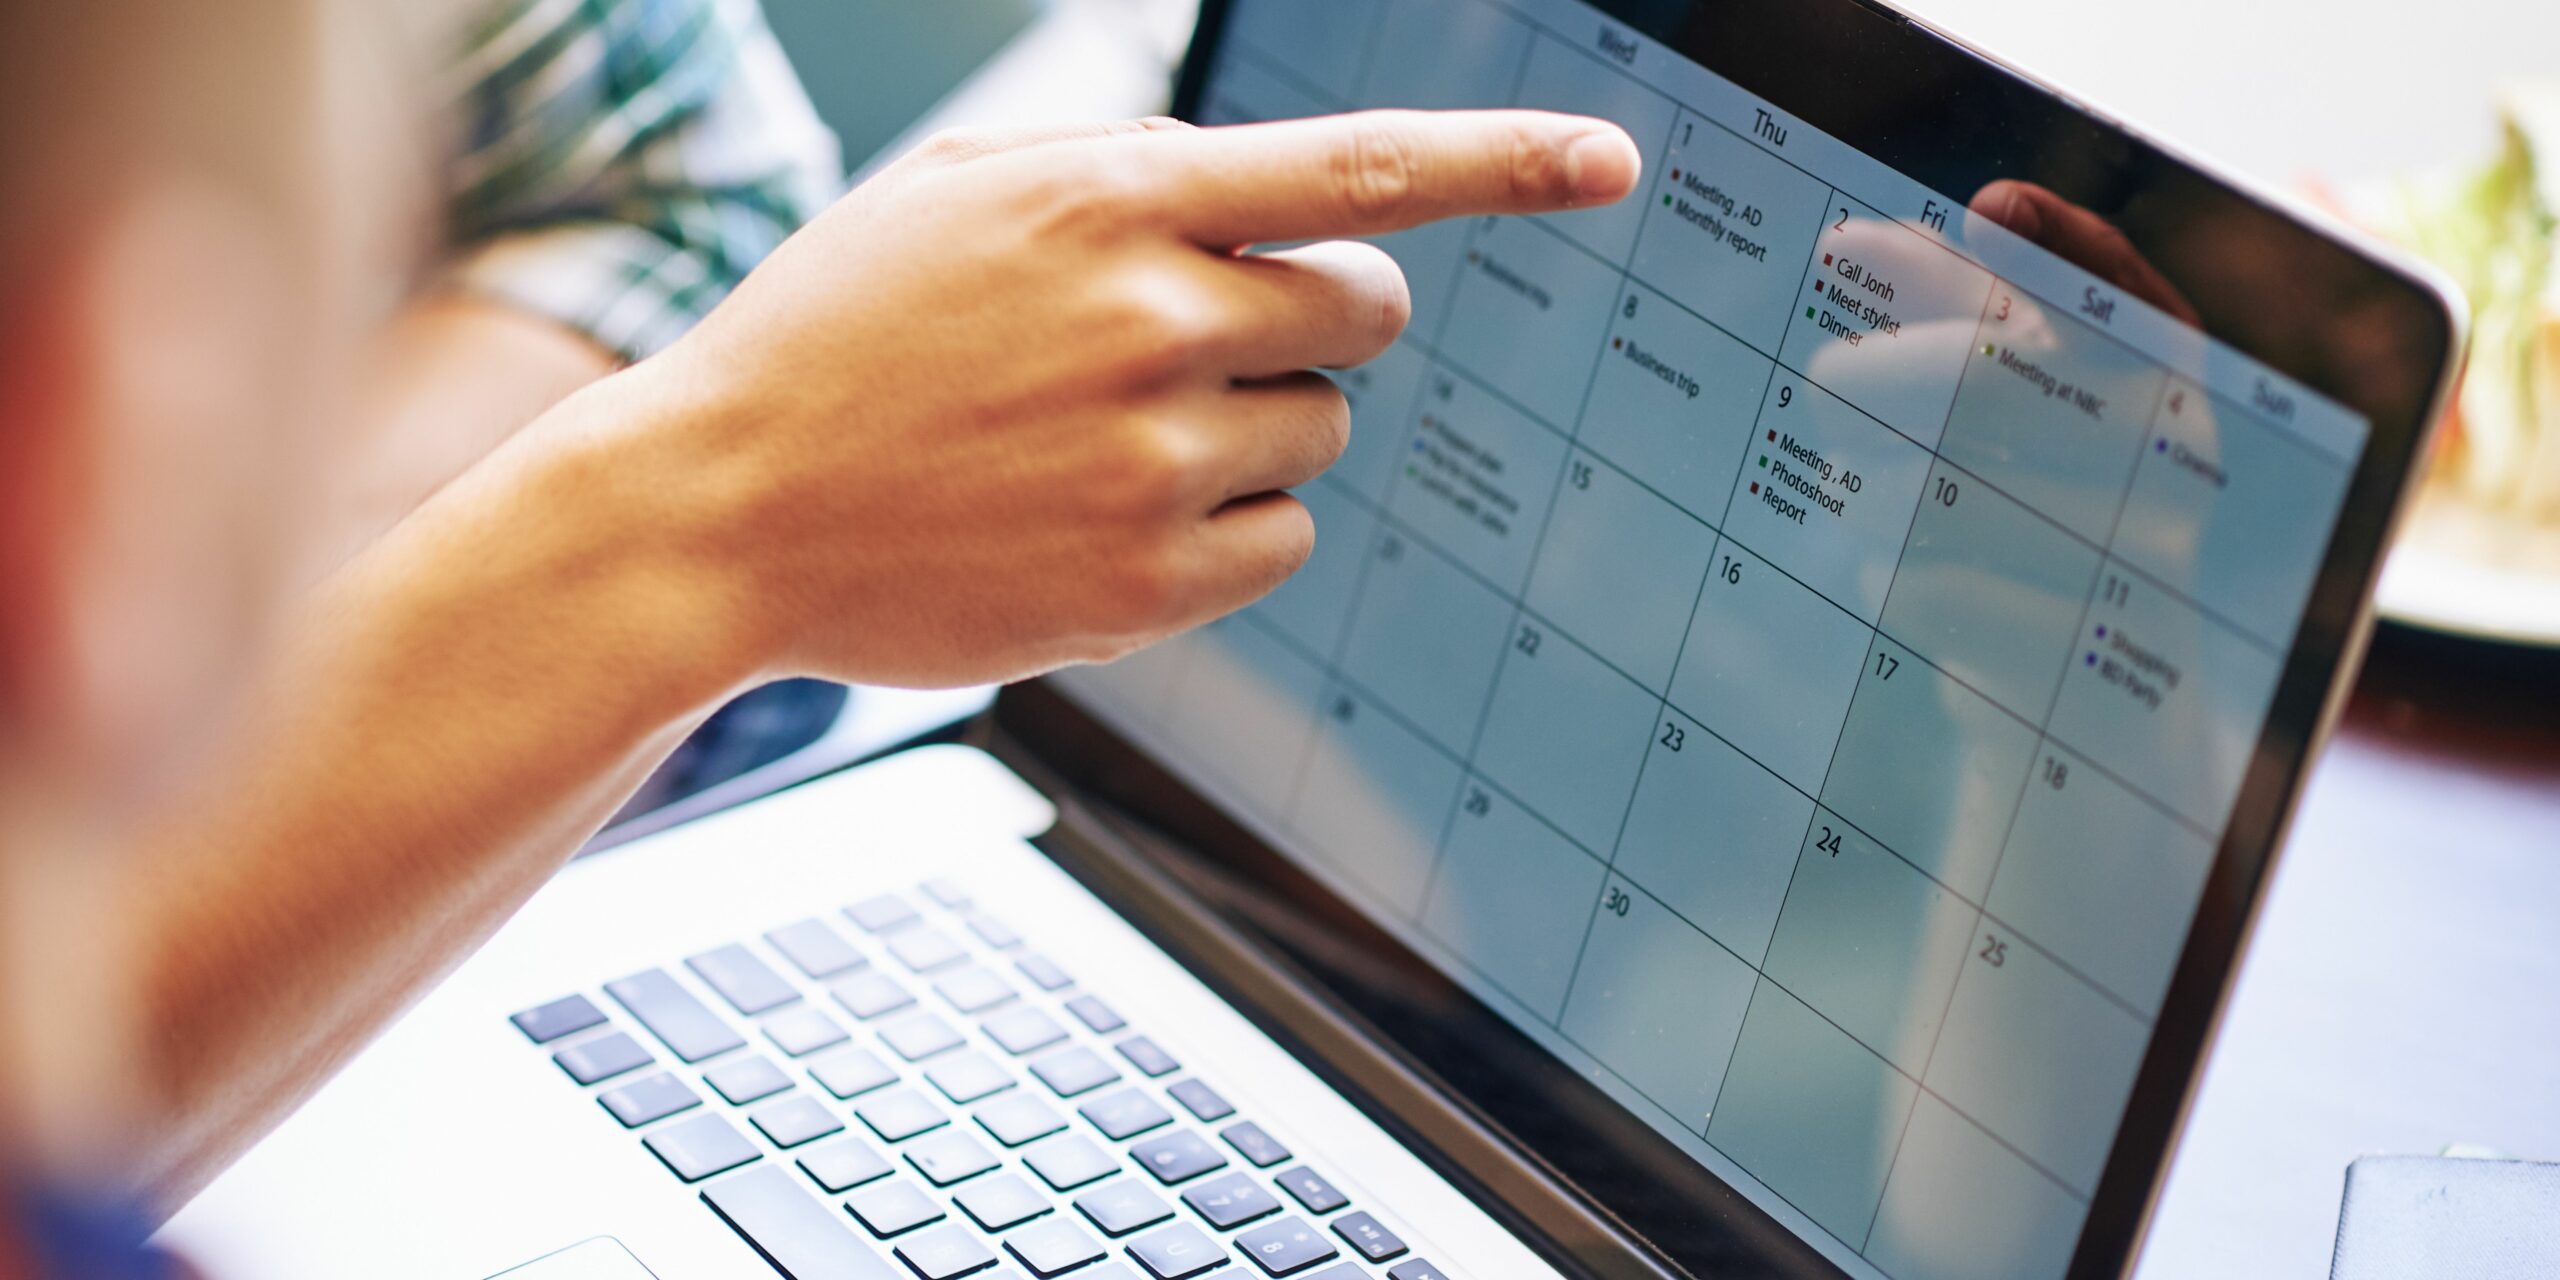 Schedule Client Engagements in Online Calendars